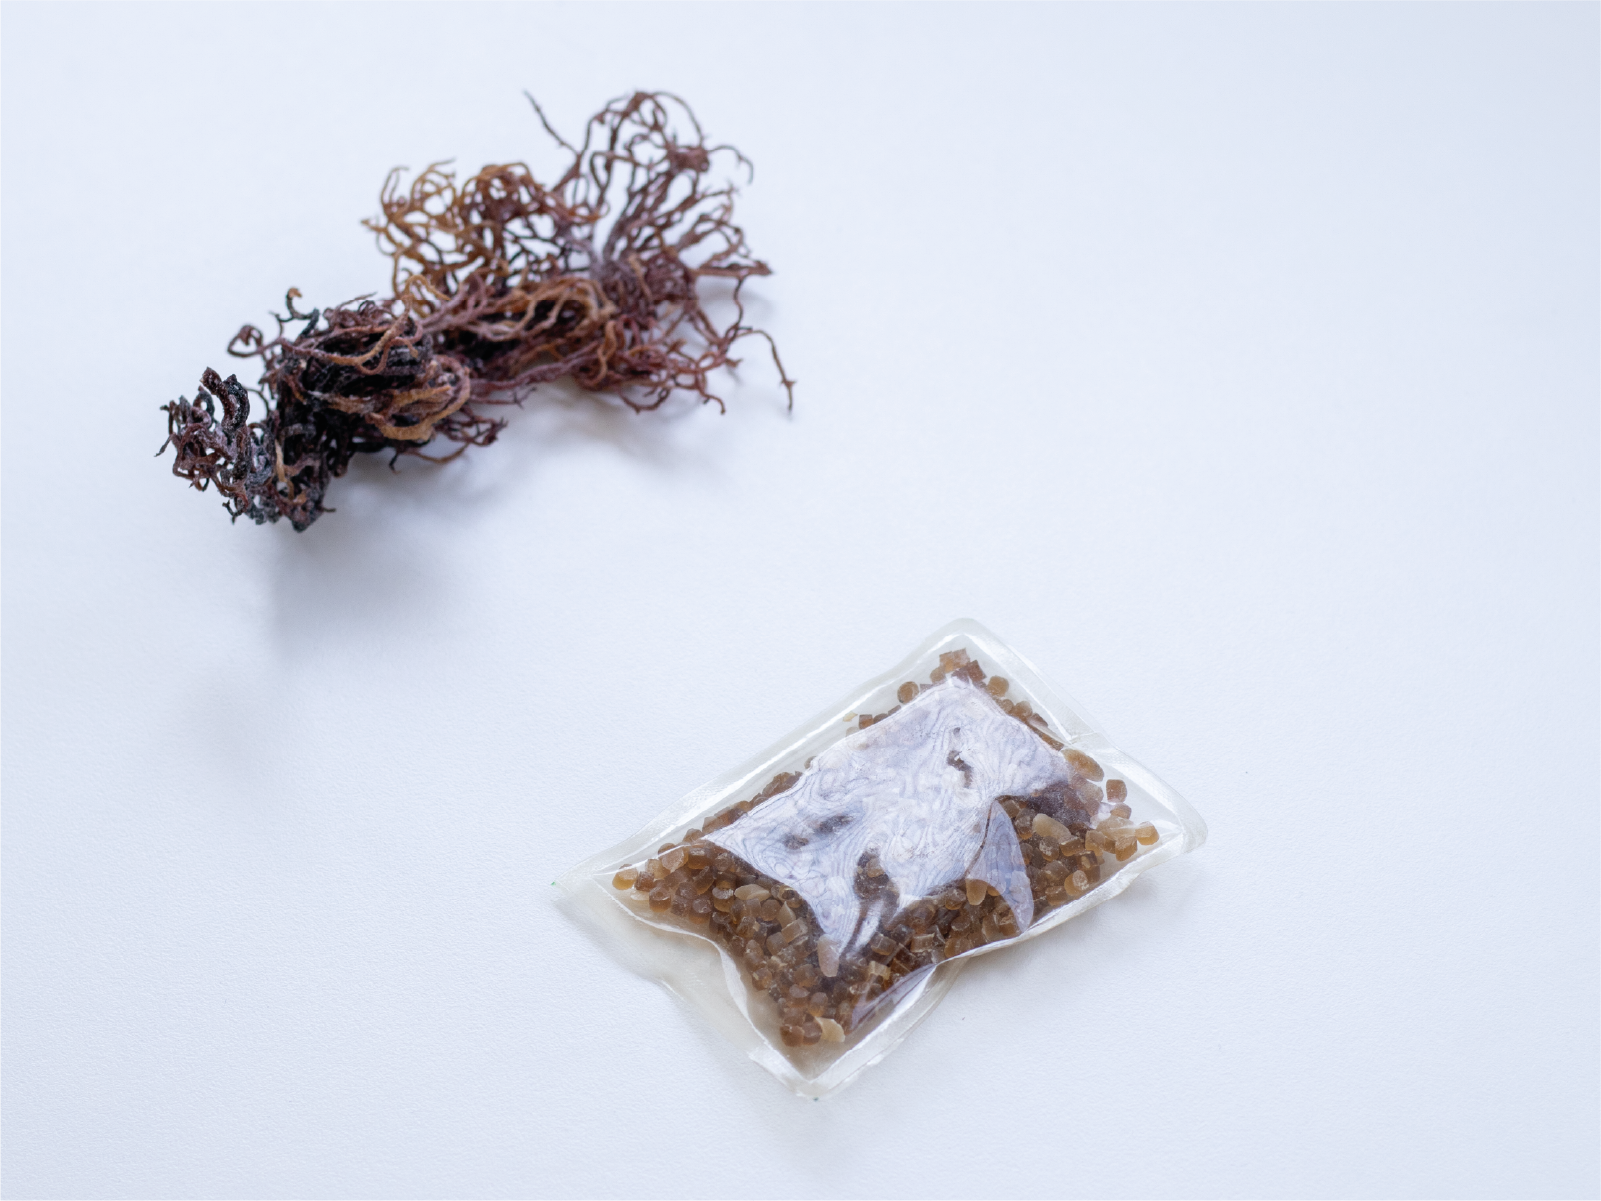 Red Seaweed with Flexsea bioplastic film